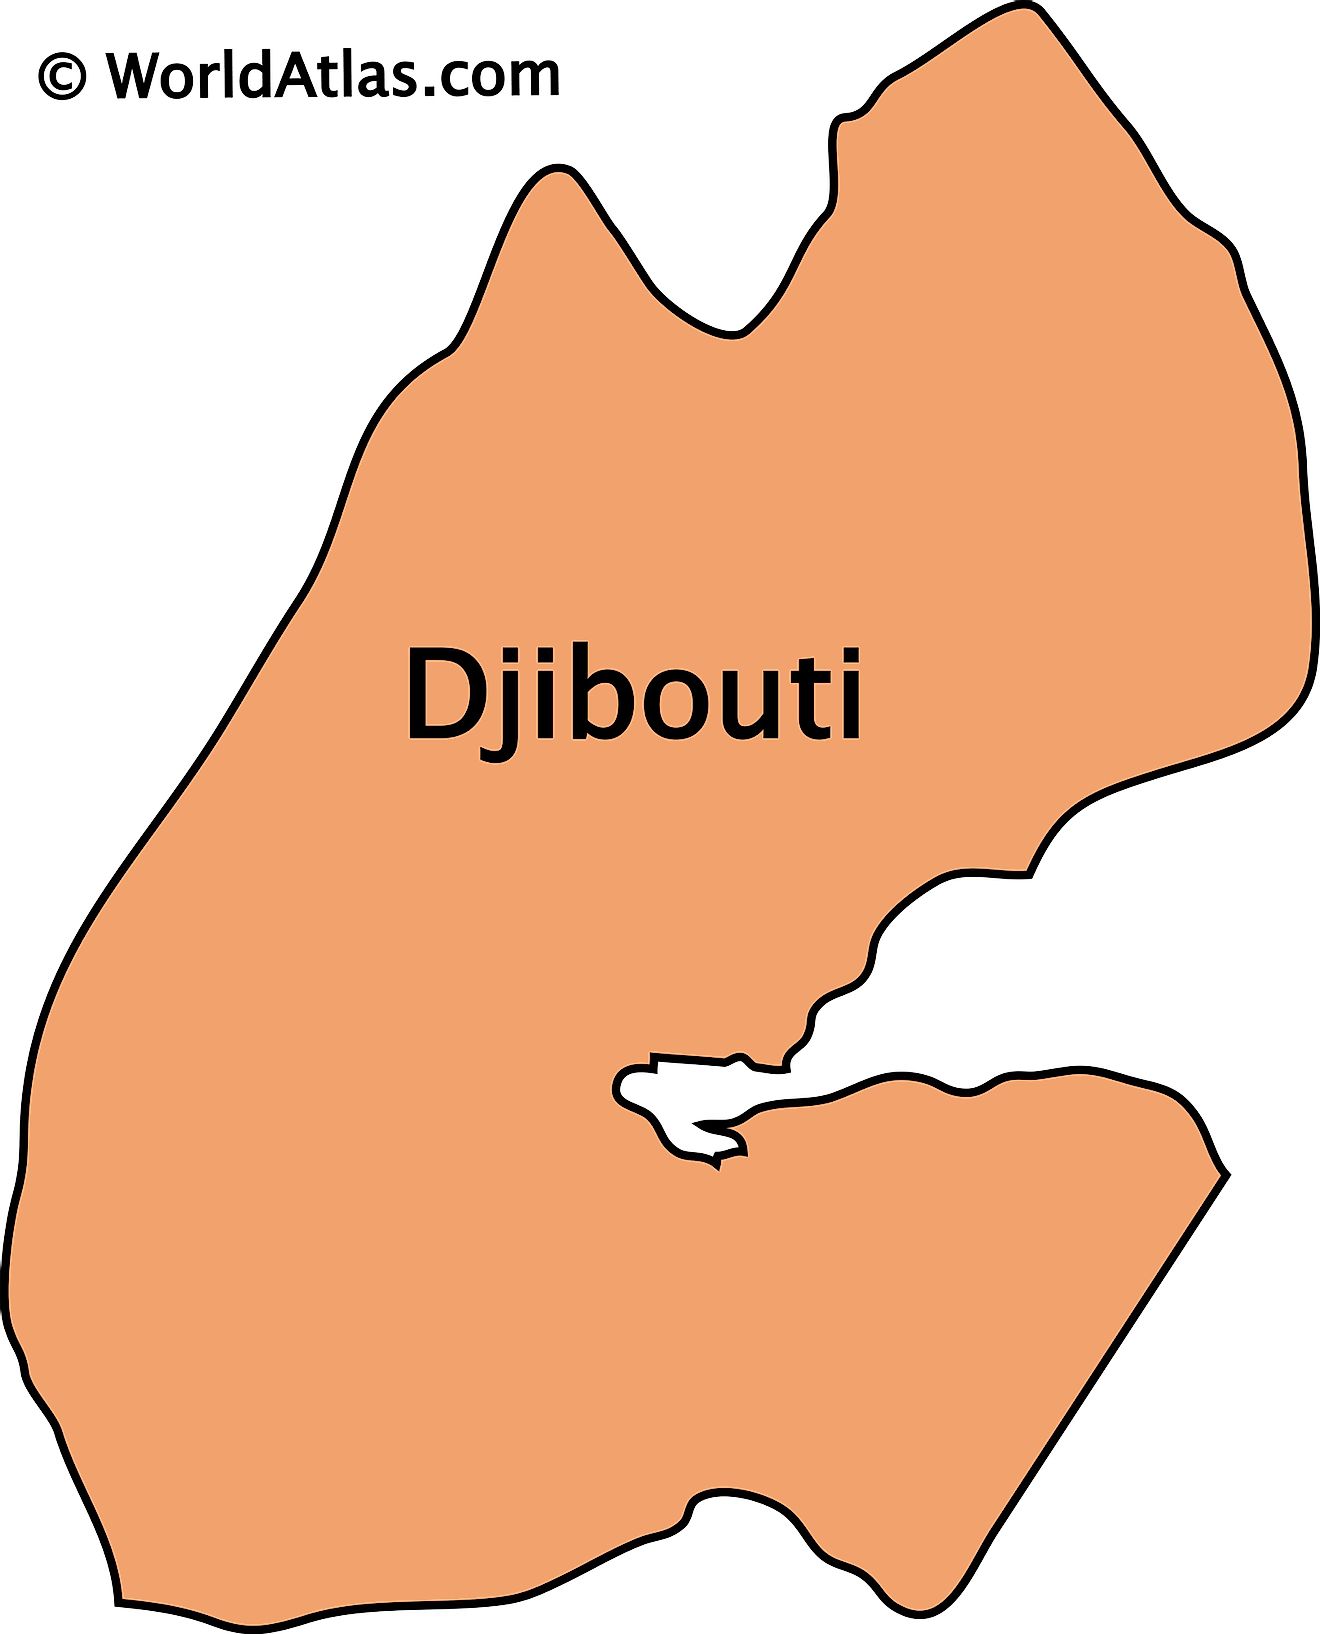 Mapa de contorno de Yibuti